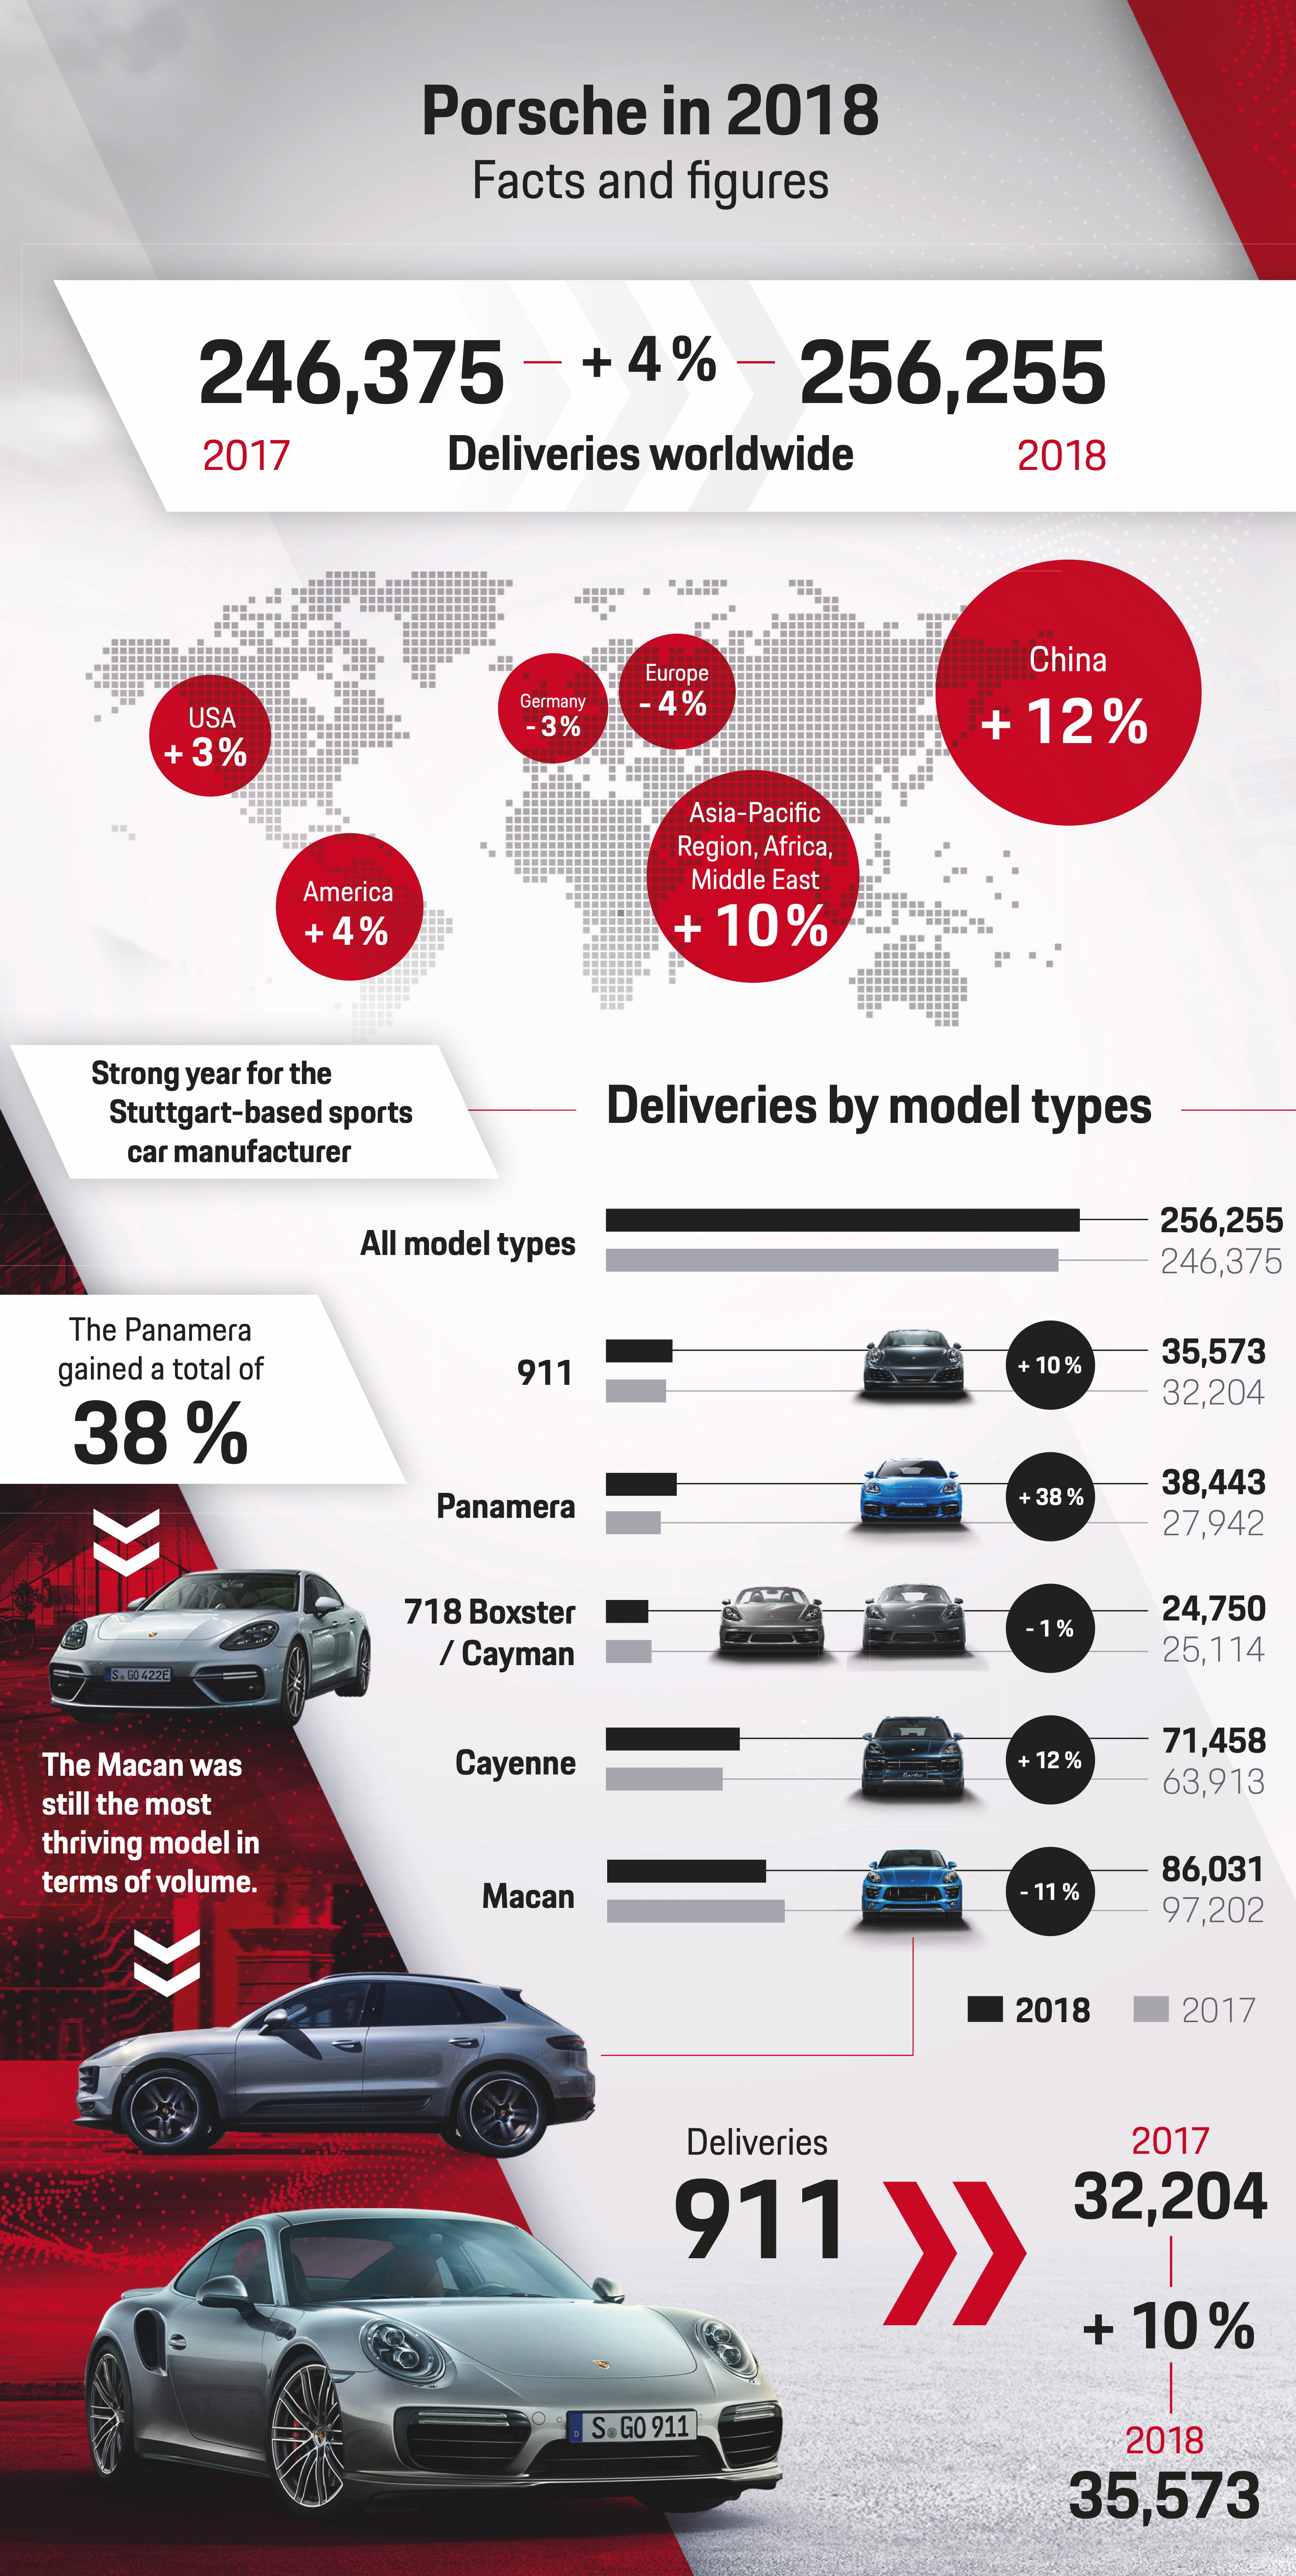 Deliveries Porsche in 2018, infographic, 2019, Porsche AG